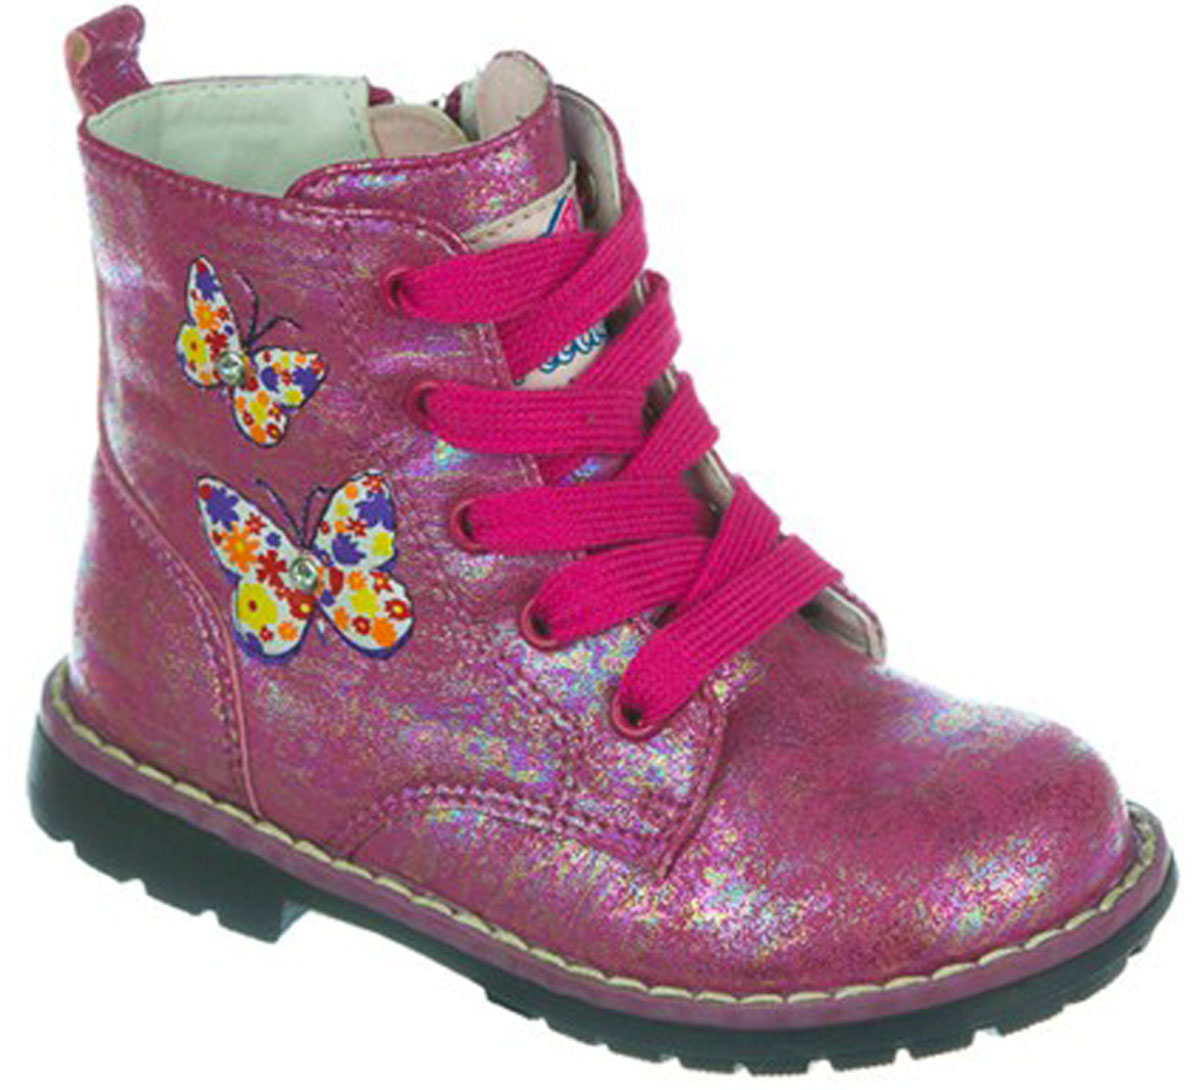 Ботинки для девочки Indigo Kids, цвет: фуксия. 51-293A/12. Размер 23